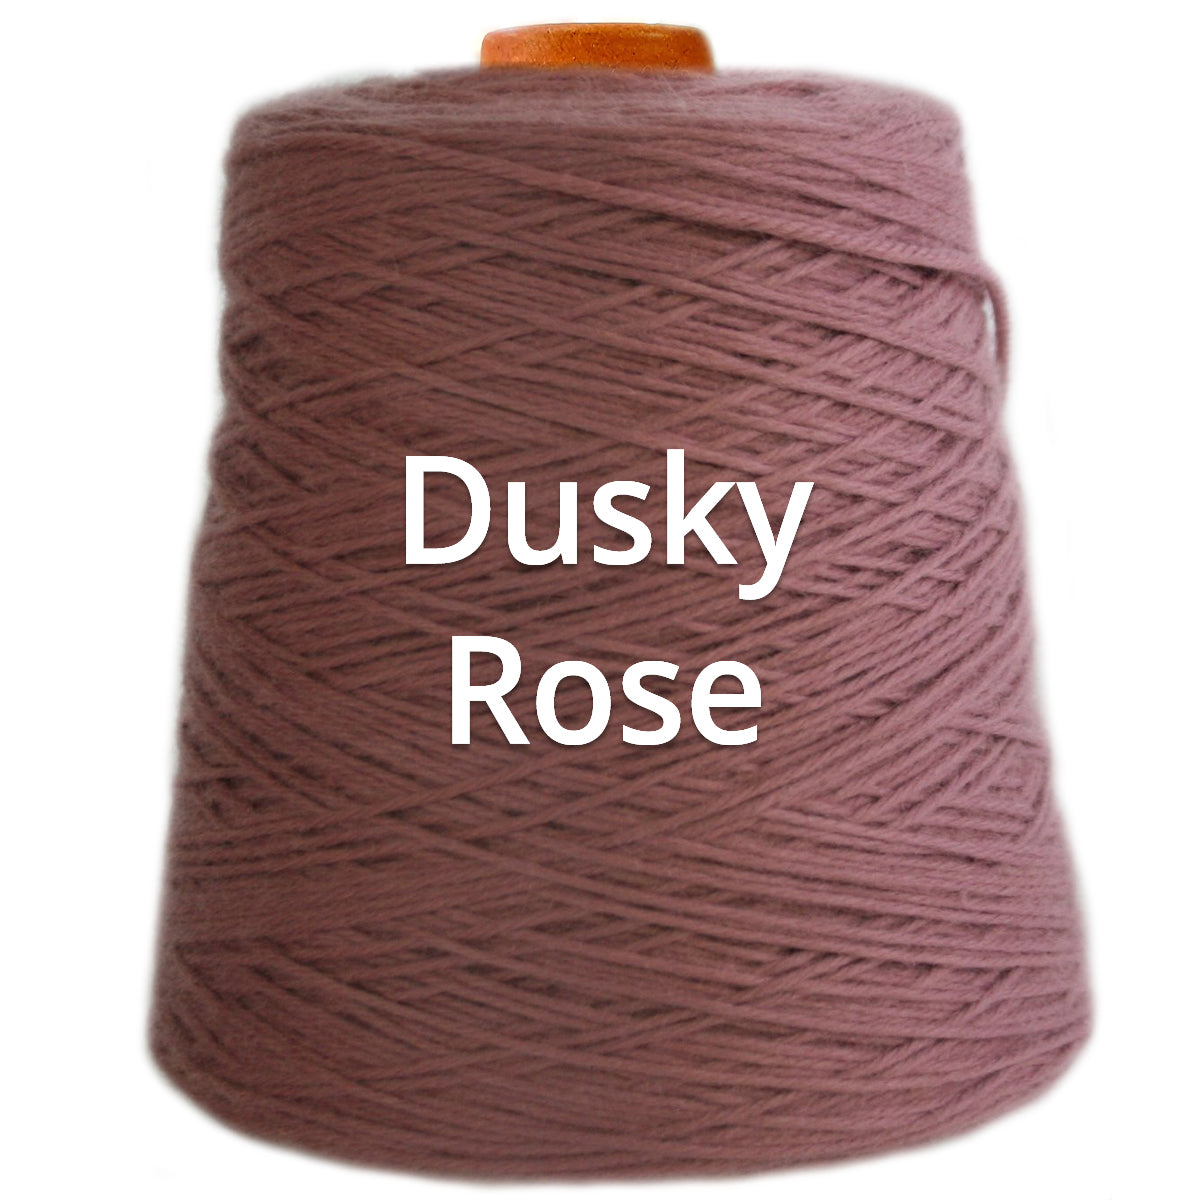 Dusky rose - Nundle Collection 12 ply Chaffey Yarn 400g Cone